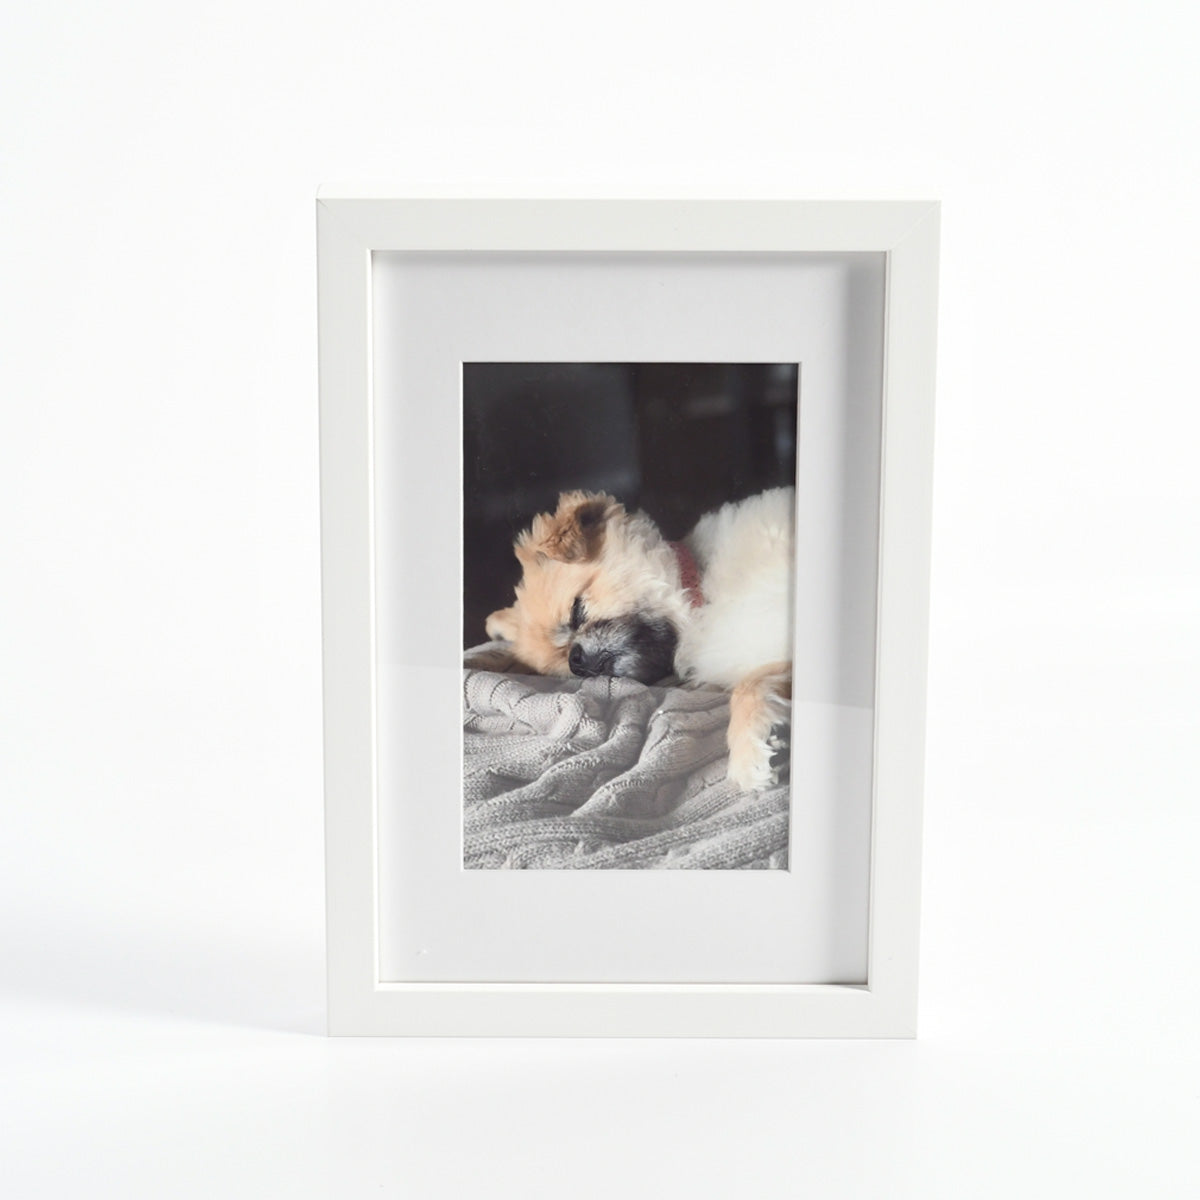 Photo of a Sleeping Dog in a Custom Framed Print